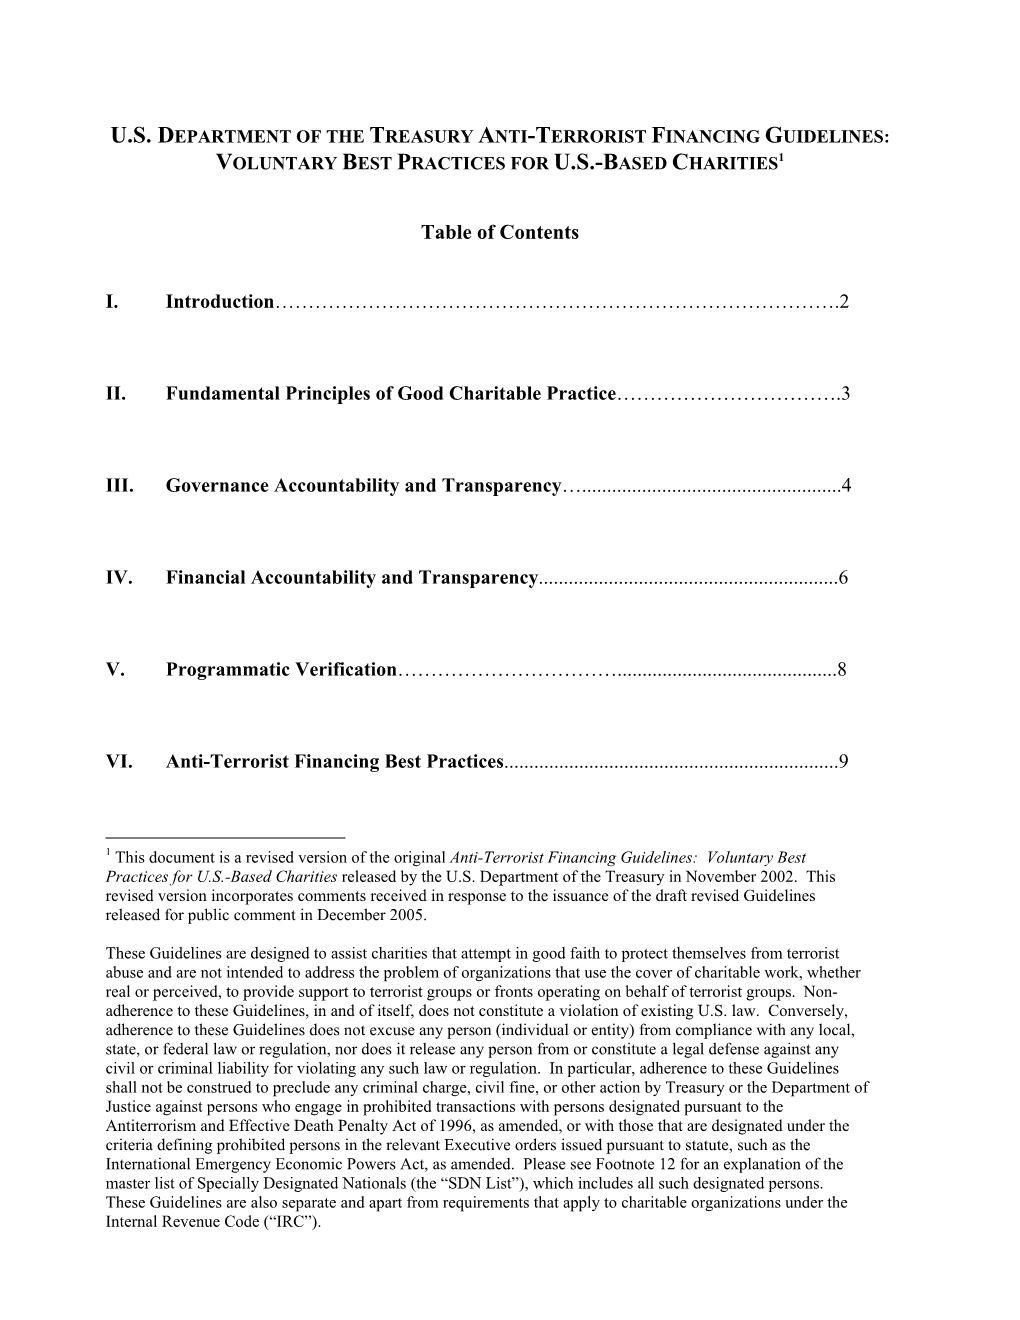 Anti-Terrorist Financing Guidelines: Voluntary Best Practices for U.S.-Based Charities1